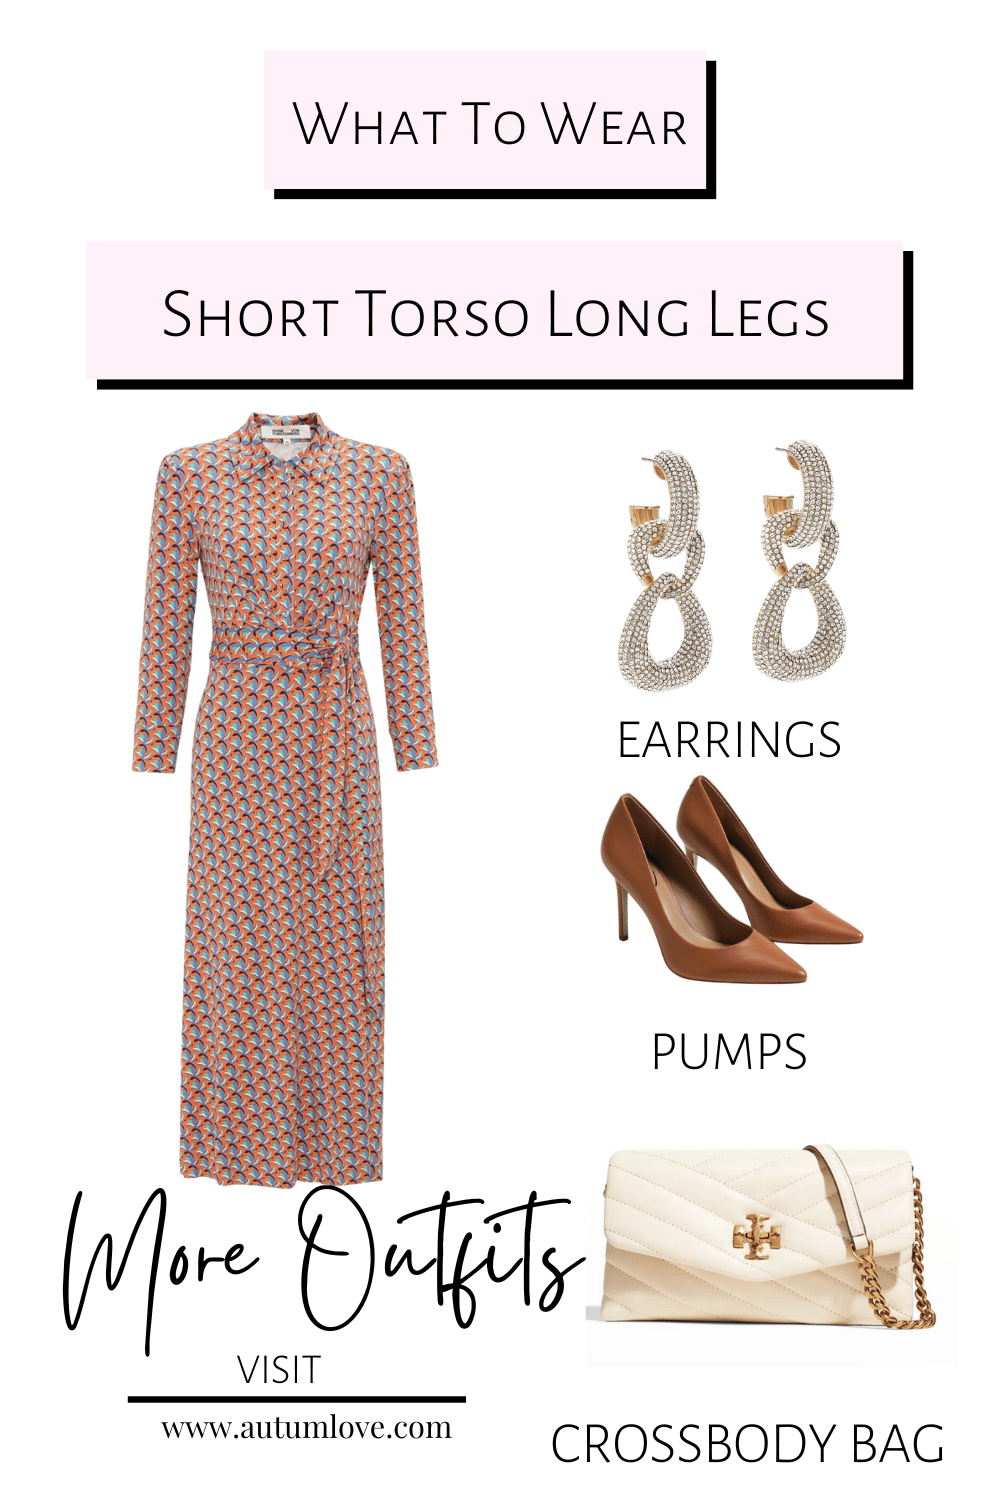 How To Dress Short Torso Long Legs